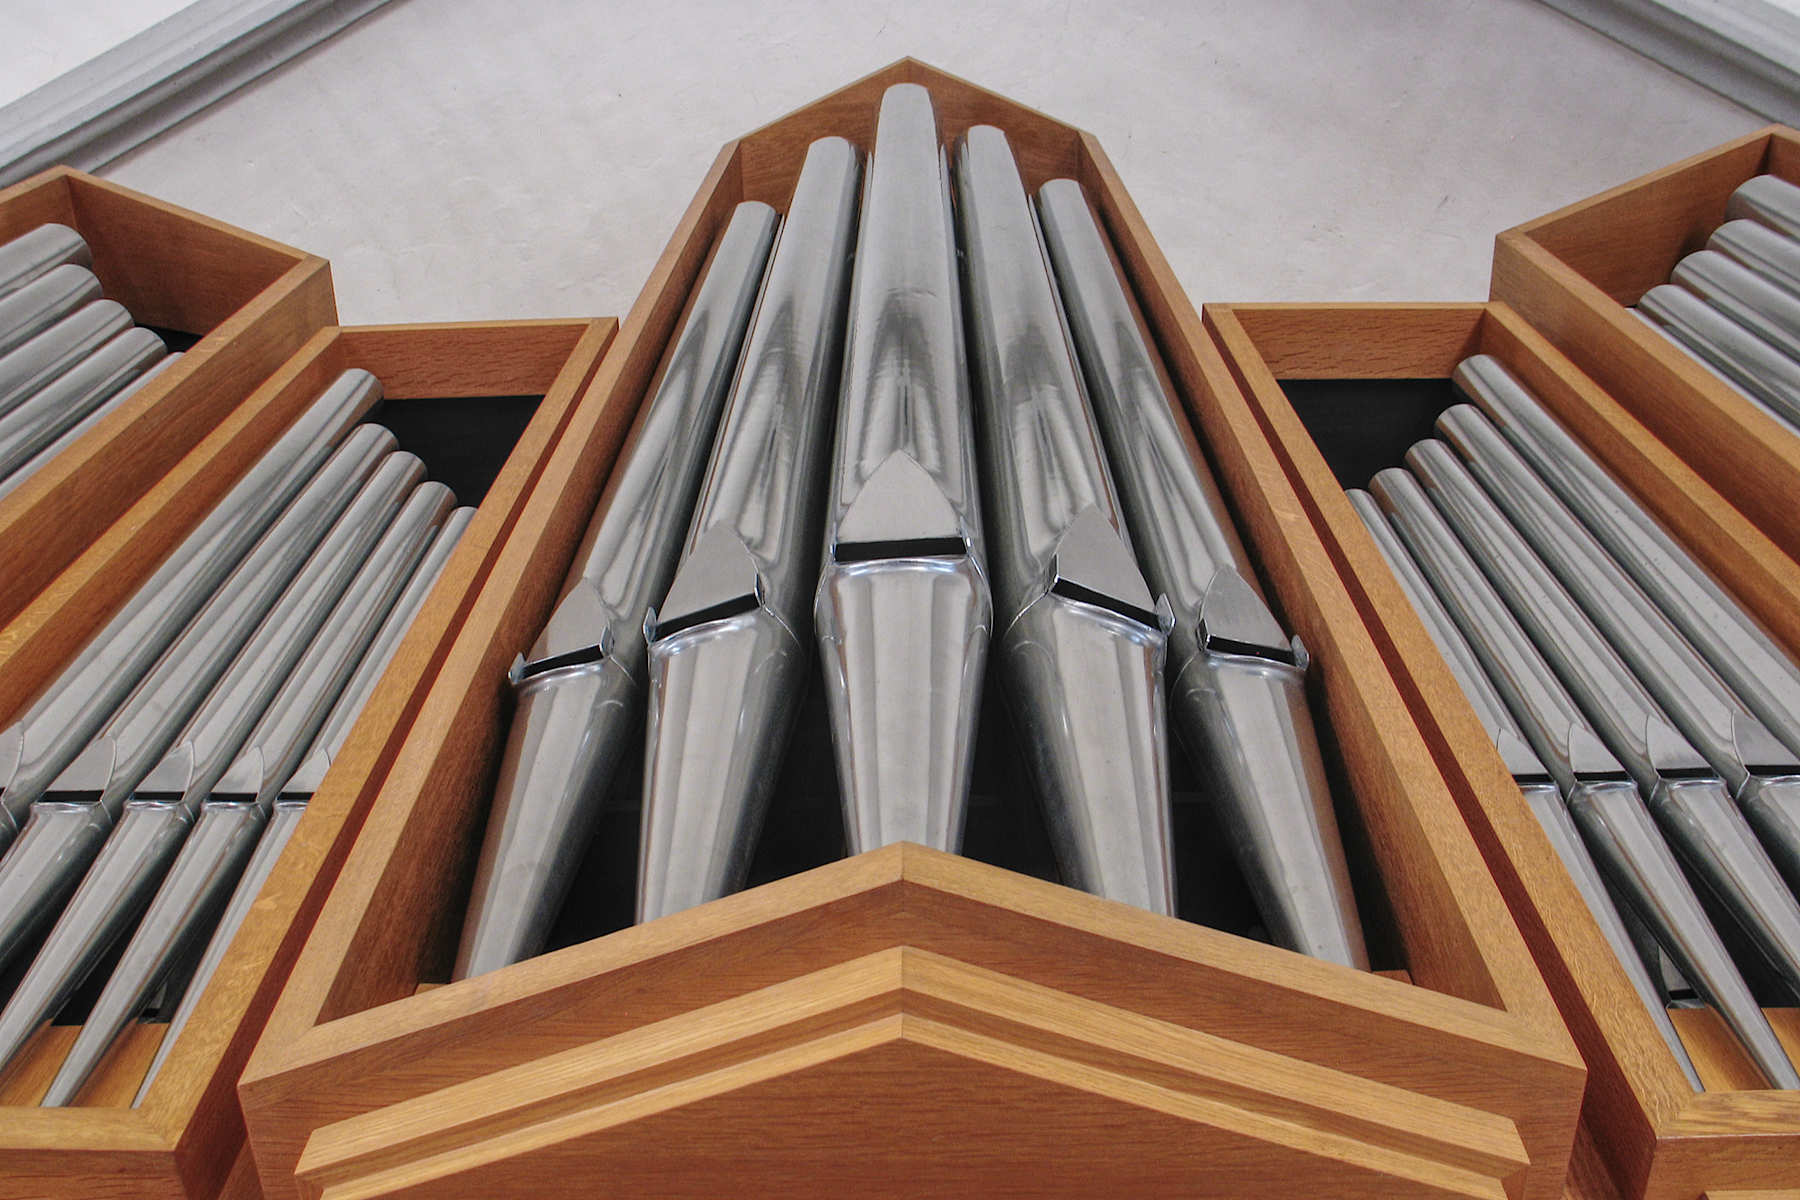 Orgel Hannover St. Crucis